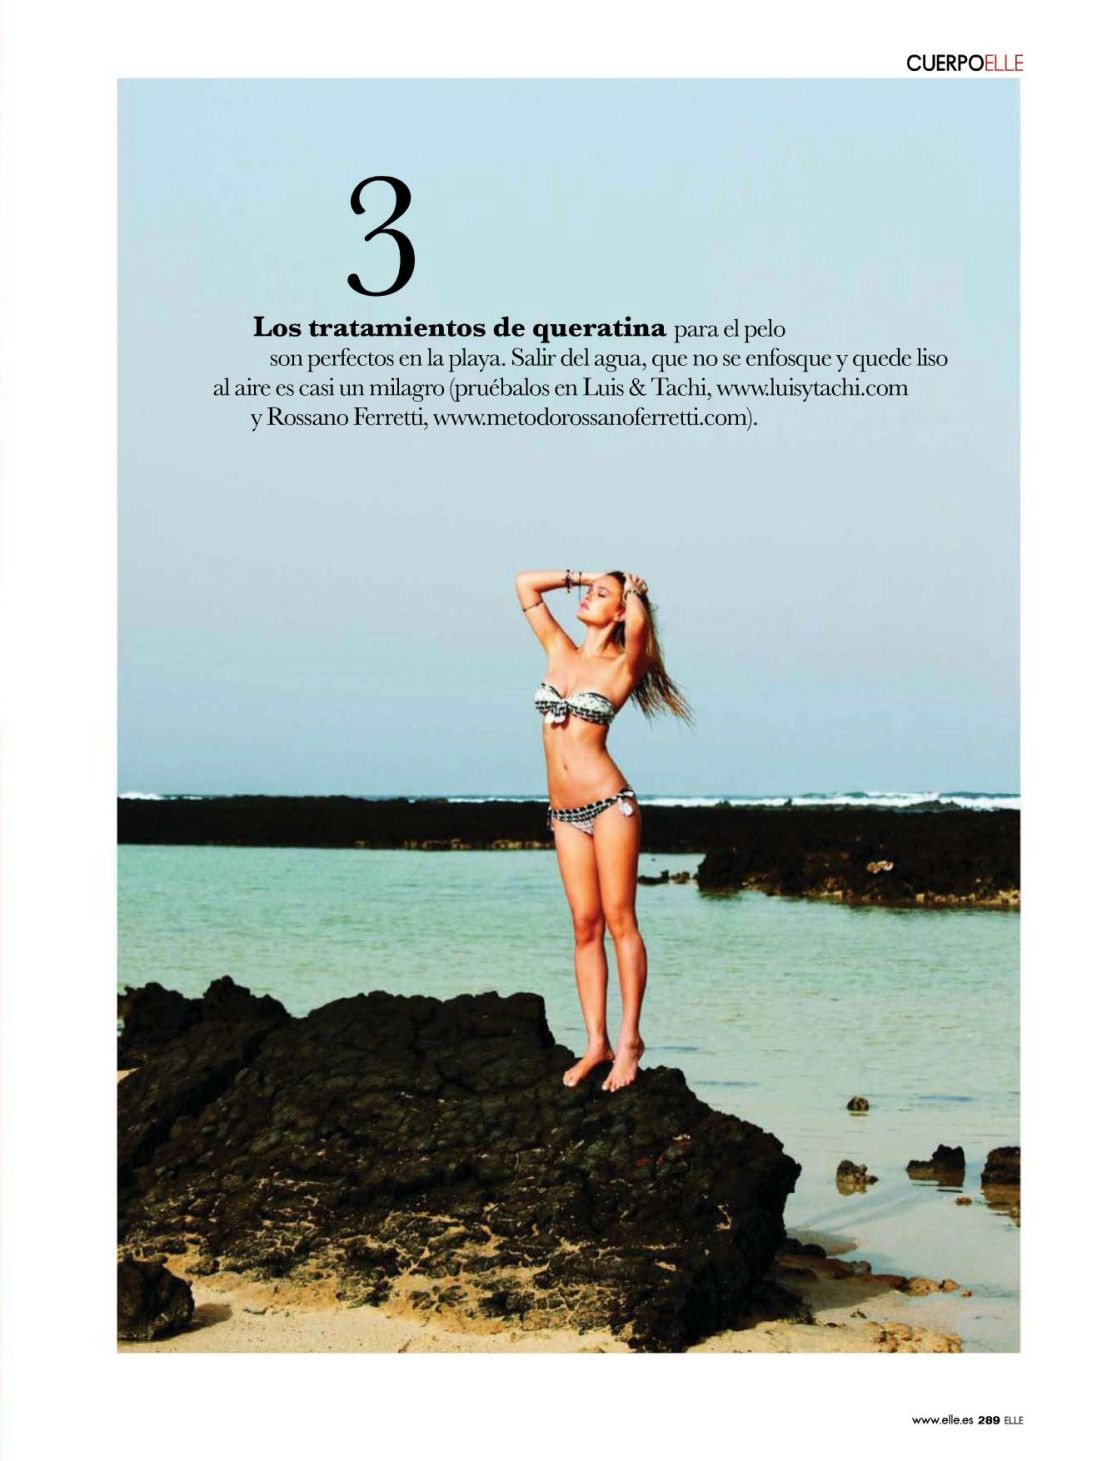 Bar Refaeli: May 2012 Elle Magazine (Spain) Photoshoot